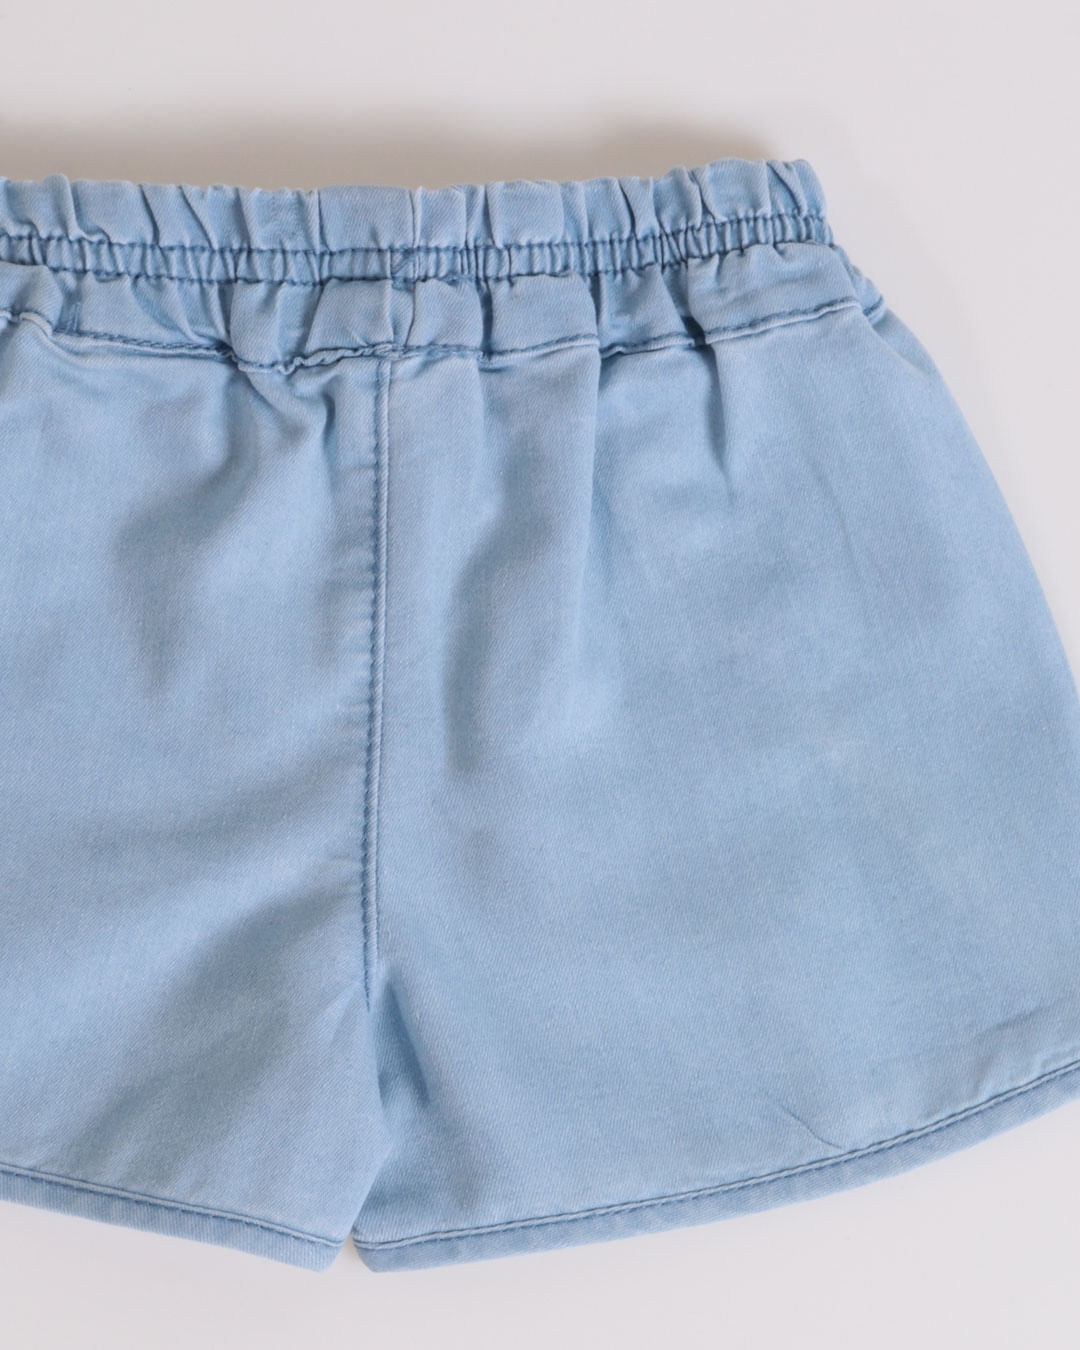 Shorts-Chambray--Lm-Fem-13---Blue-Jeans-Claro